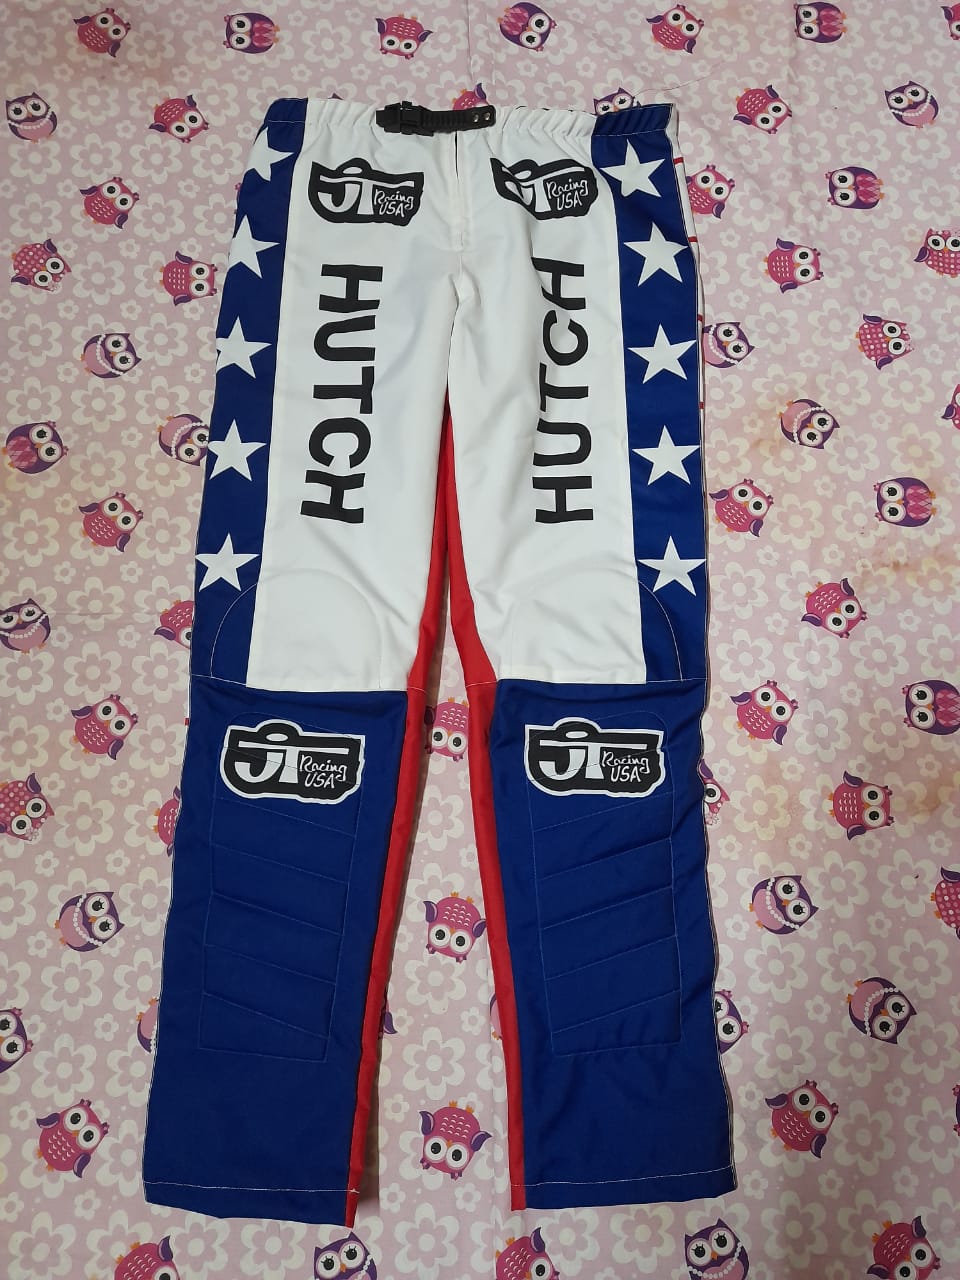 Hutch Vintage JT Racing BMX Pants RED BLUE - Apace Racing 